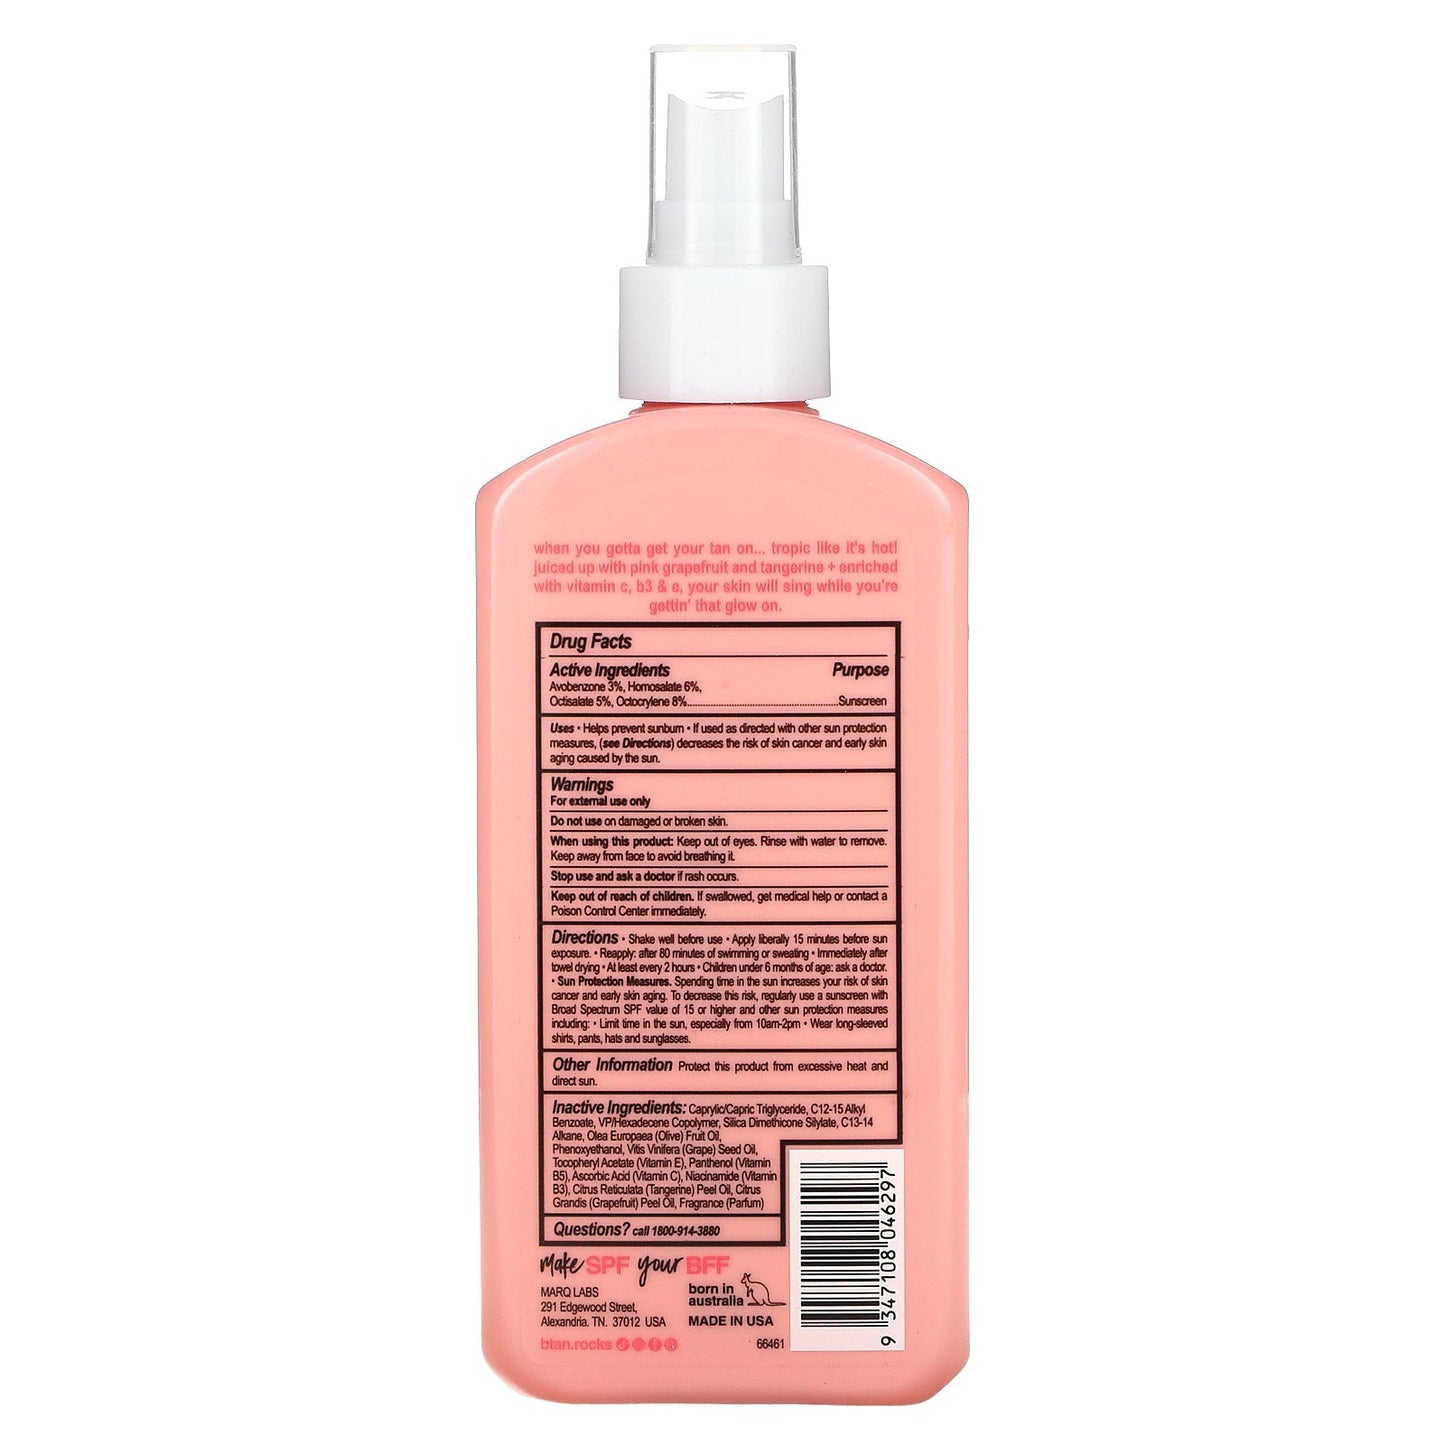 b.tan, Tropic Like It's Hot, Deep Tanning Dry Spray Oil Sunscreen, SPF 15, 8 fl oz (236 ml)